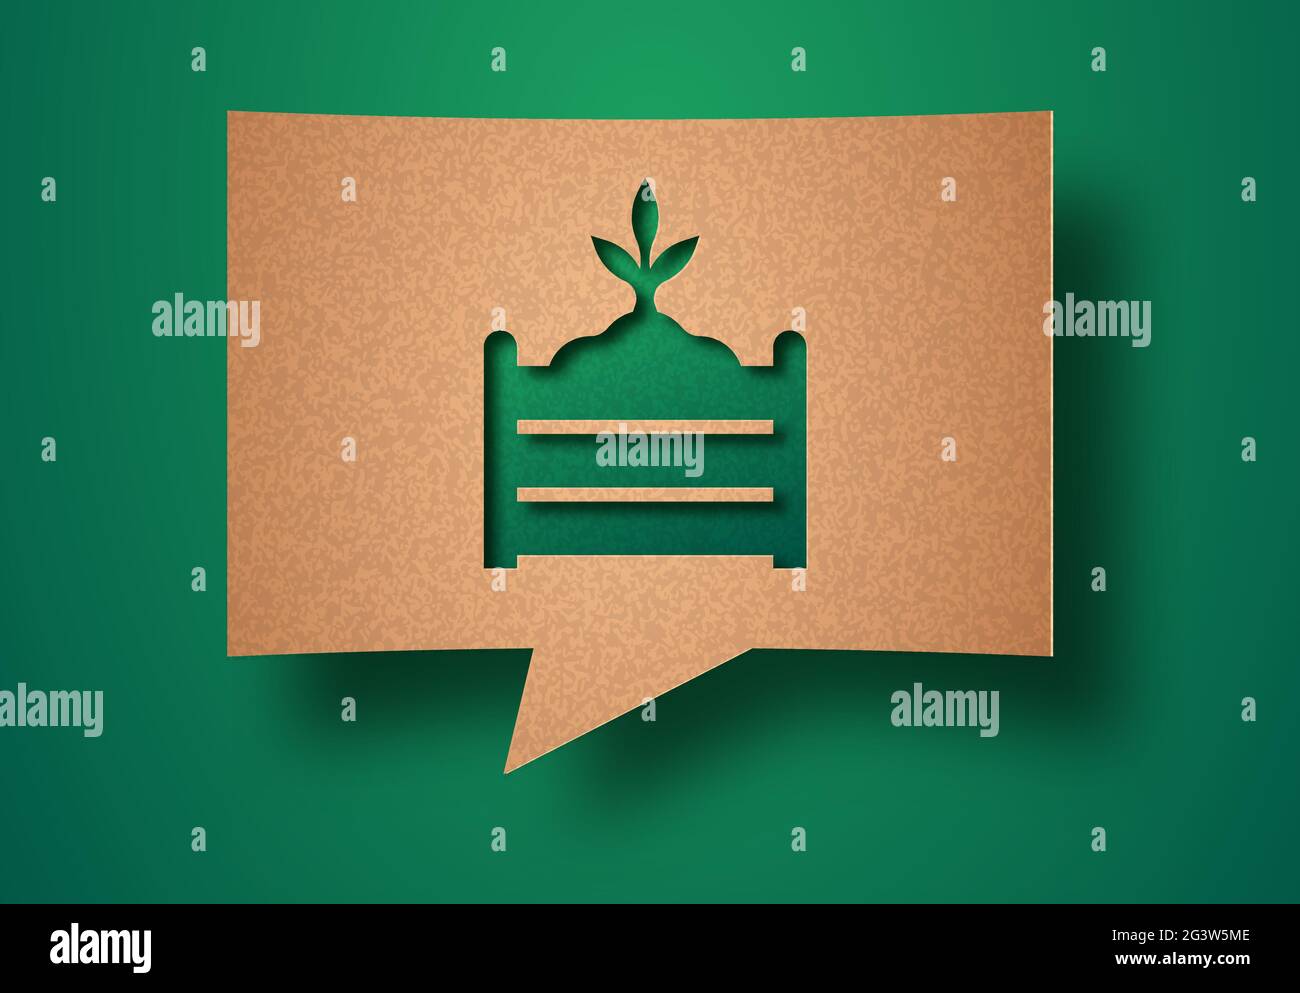 Kompostierung papercut Illustration Konzept mit grünen Pflanzenblatt und Gartenblumen. 3D-Kompost-Düngemittel Ausschnitt Handwerk Design aus recyceltem Papier Chat BU Stock Vektor